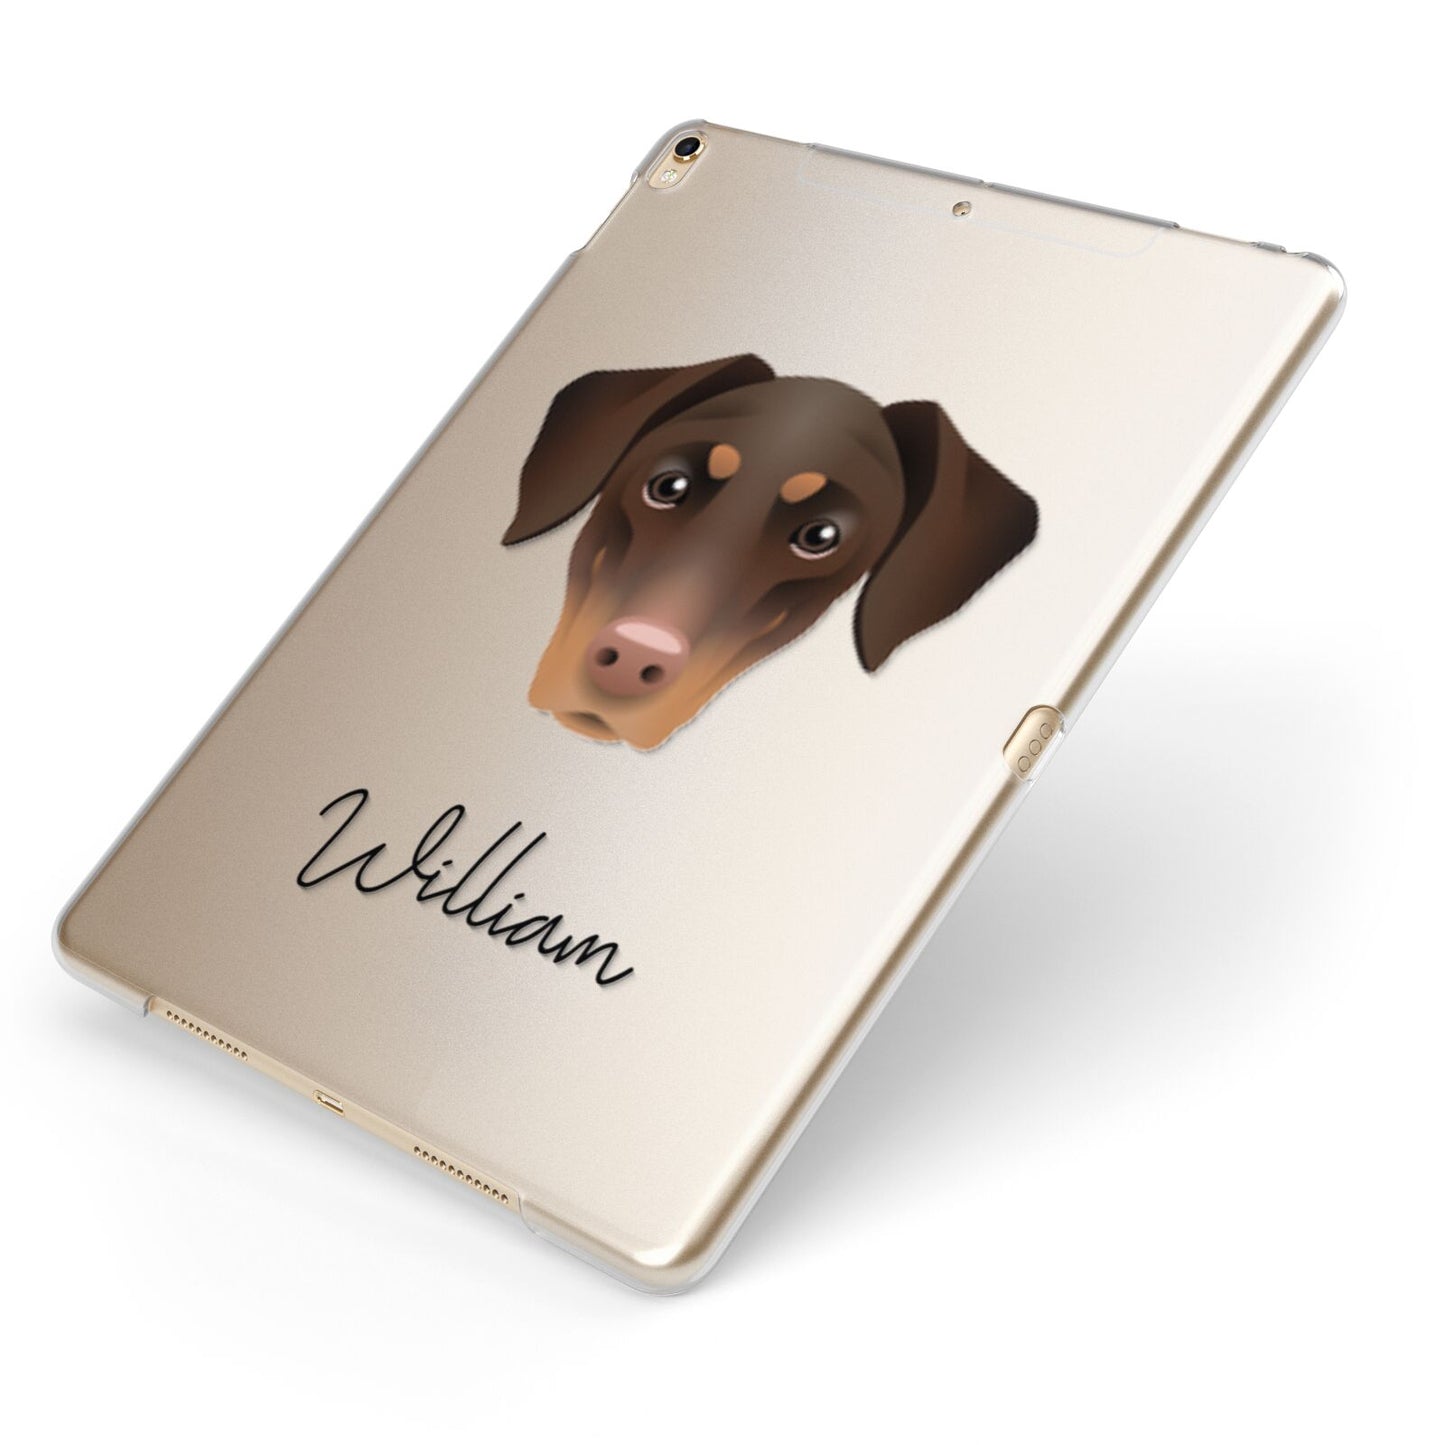 Dobermann Personalised Apple iPad Case on Gold iPad Side View